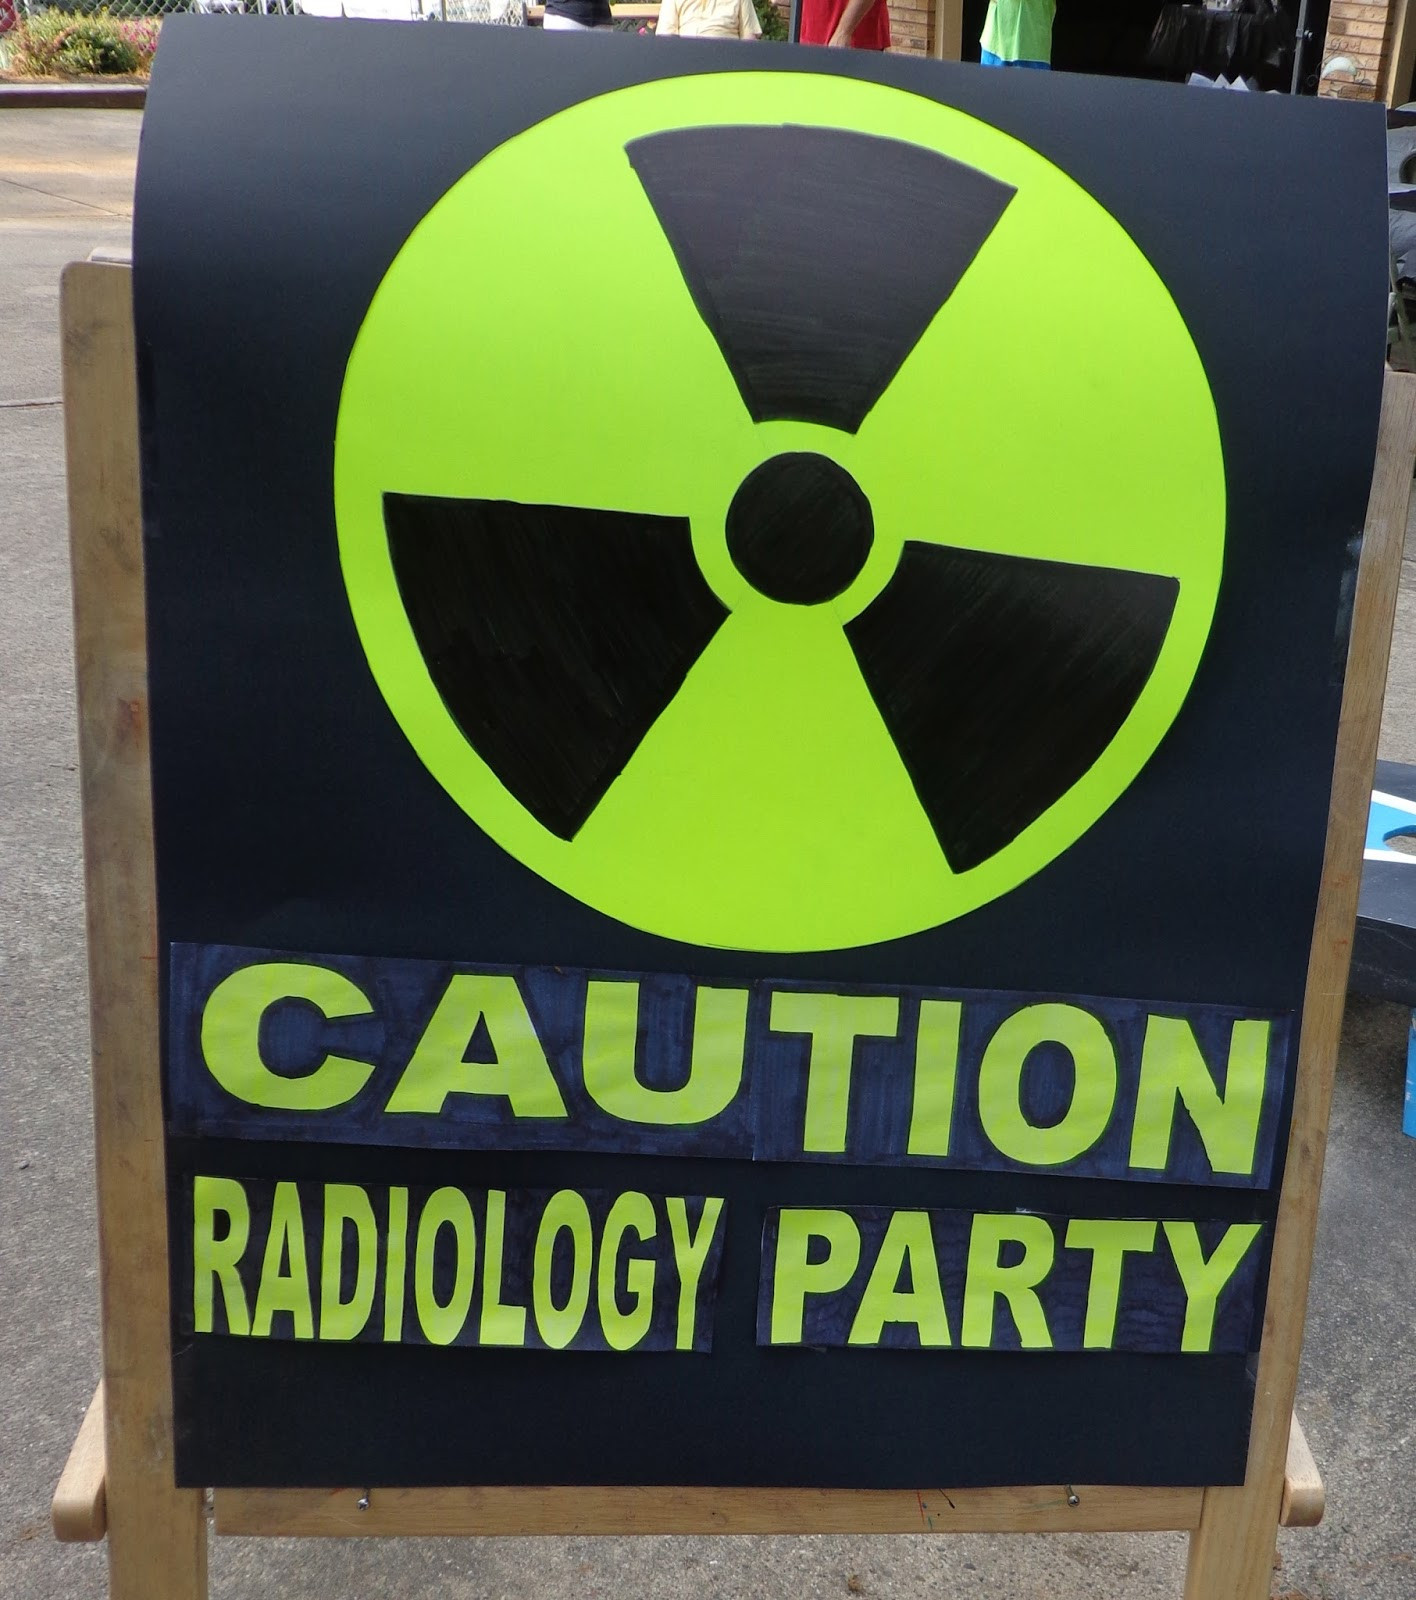 Radiology Graduation Party Ideas
 Radiology Party Ideas Radiology Graduation Party Bone Theme